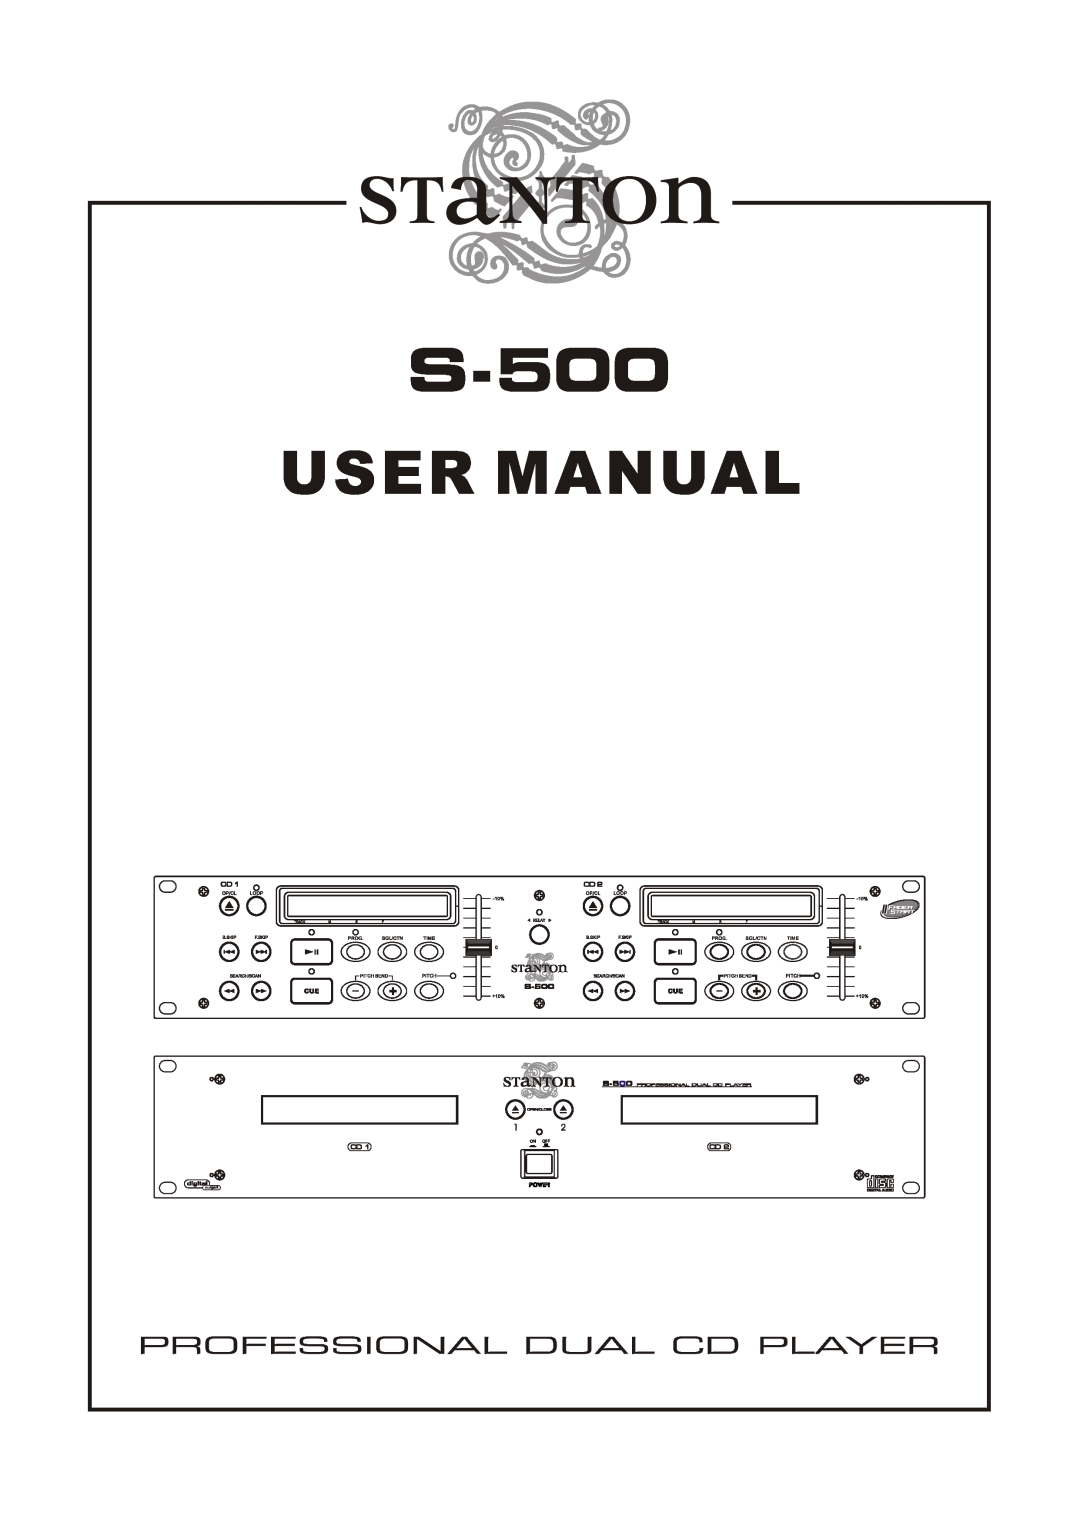 Stanton S-500 user manual 